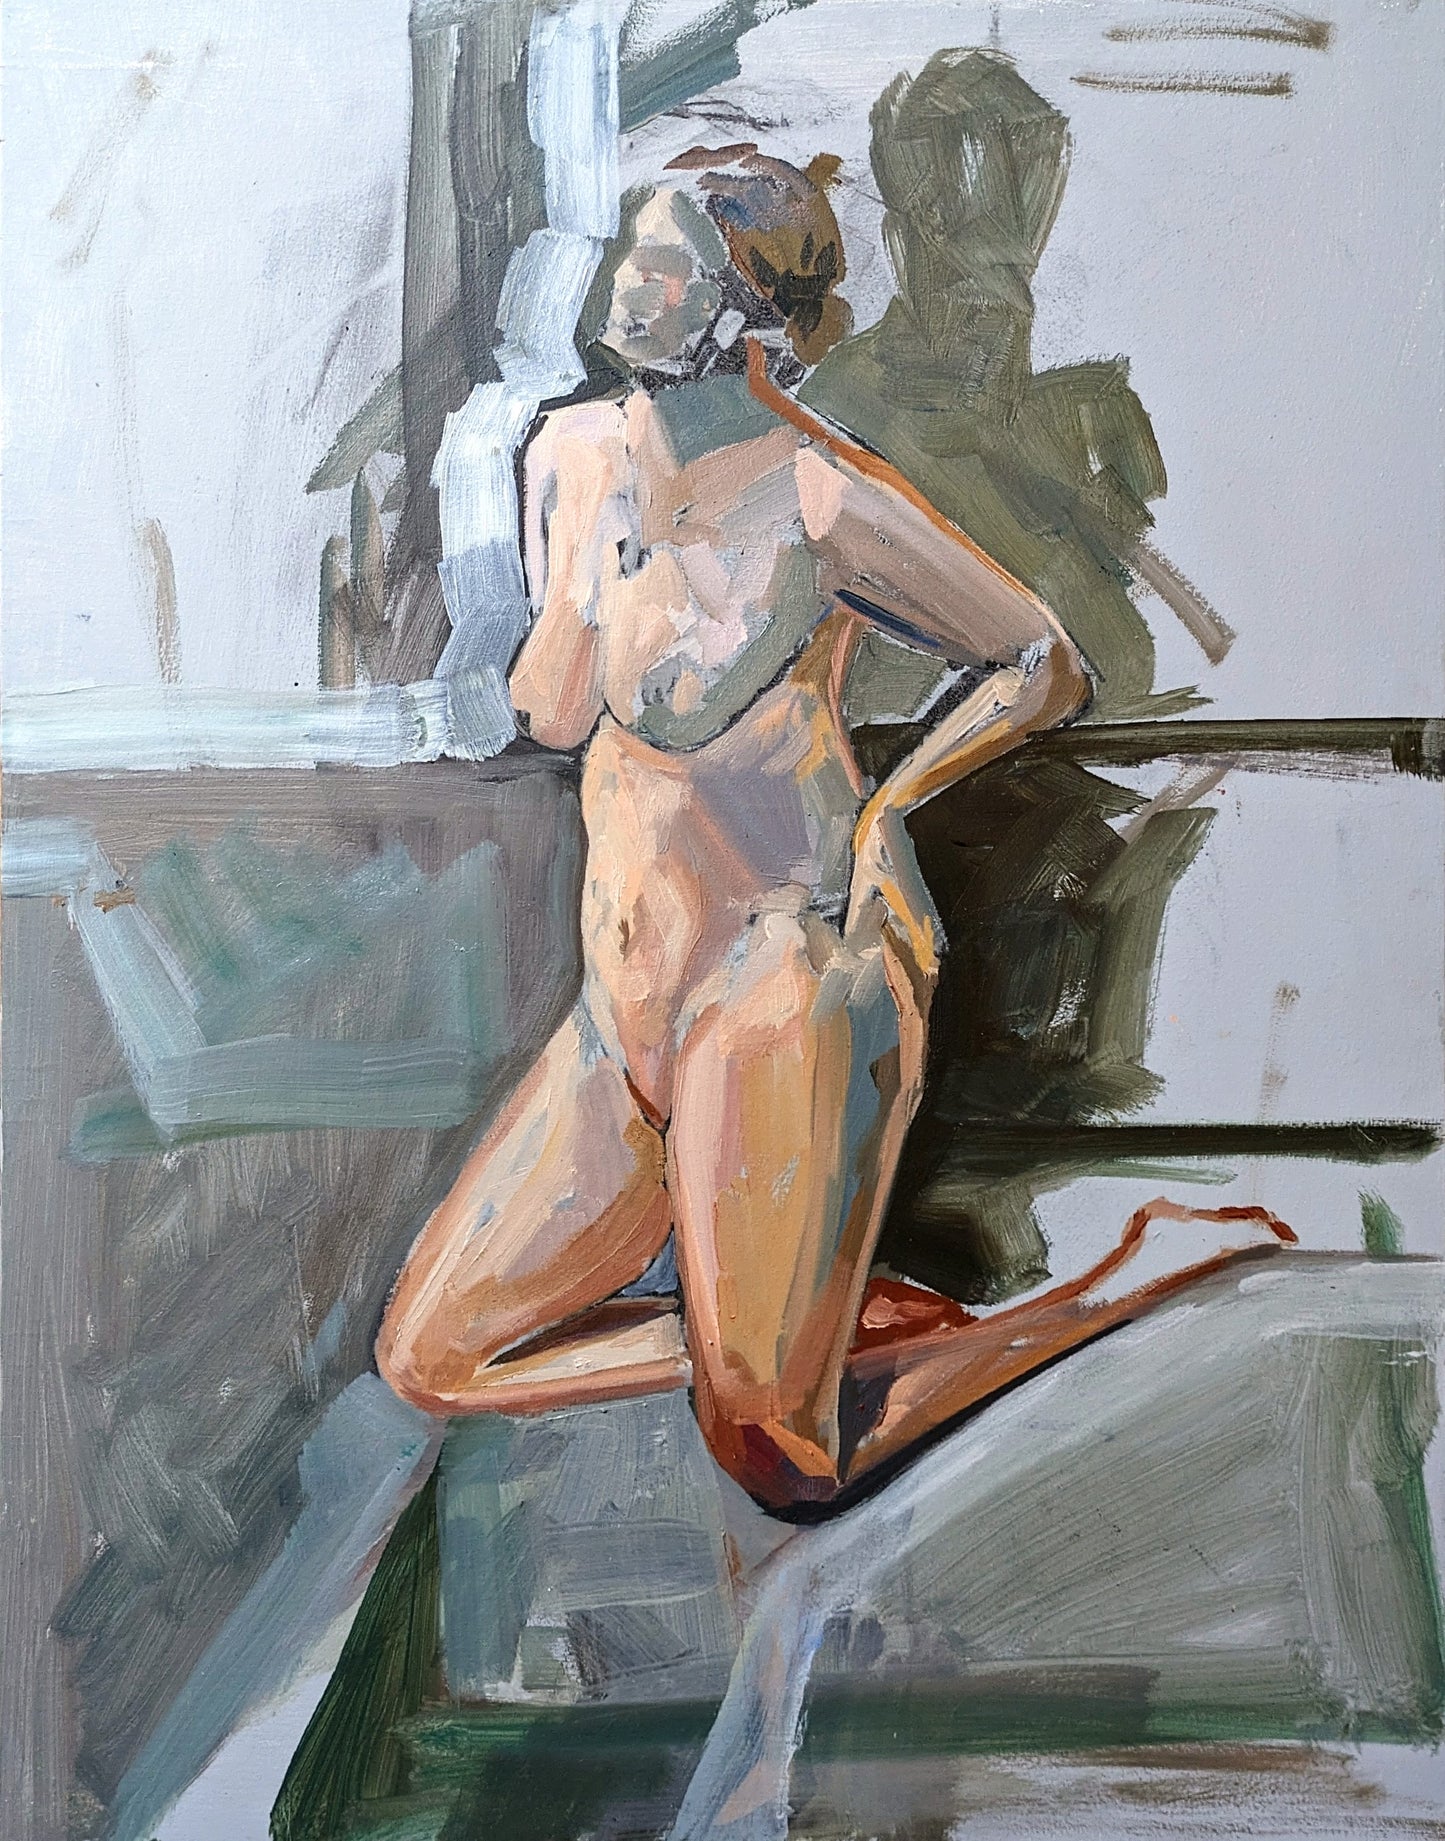 "Woman kneeling in Sunlight" by Melissa Clements